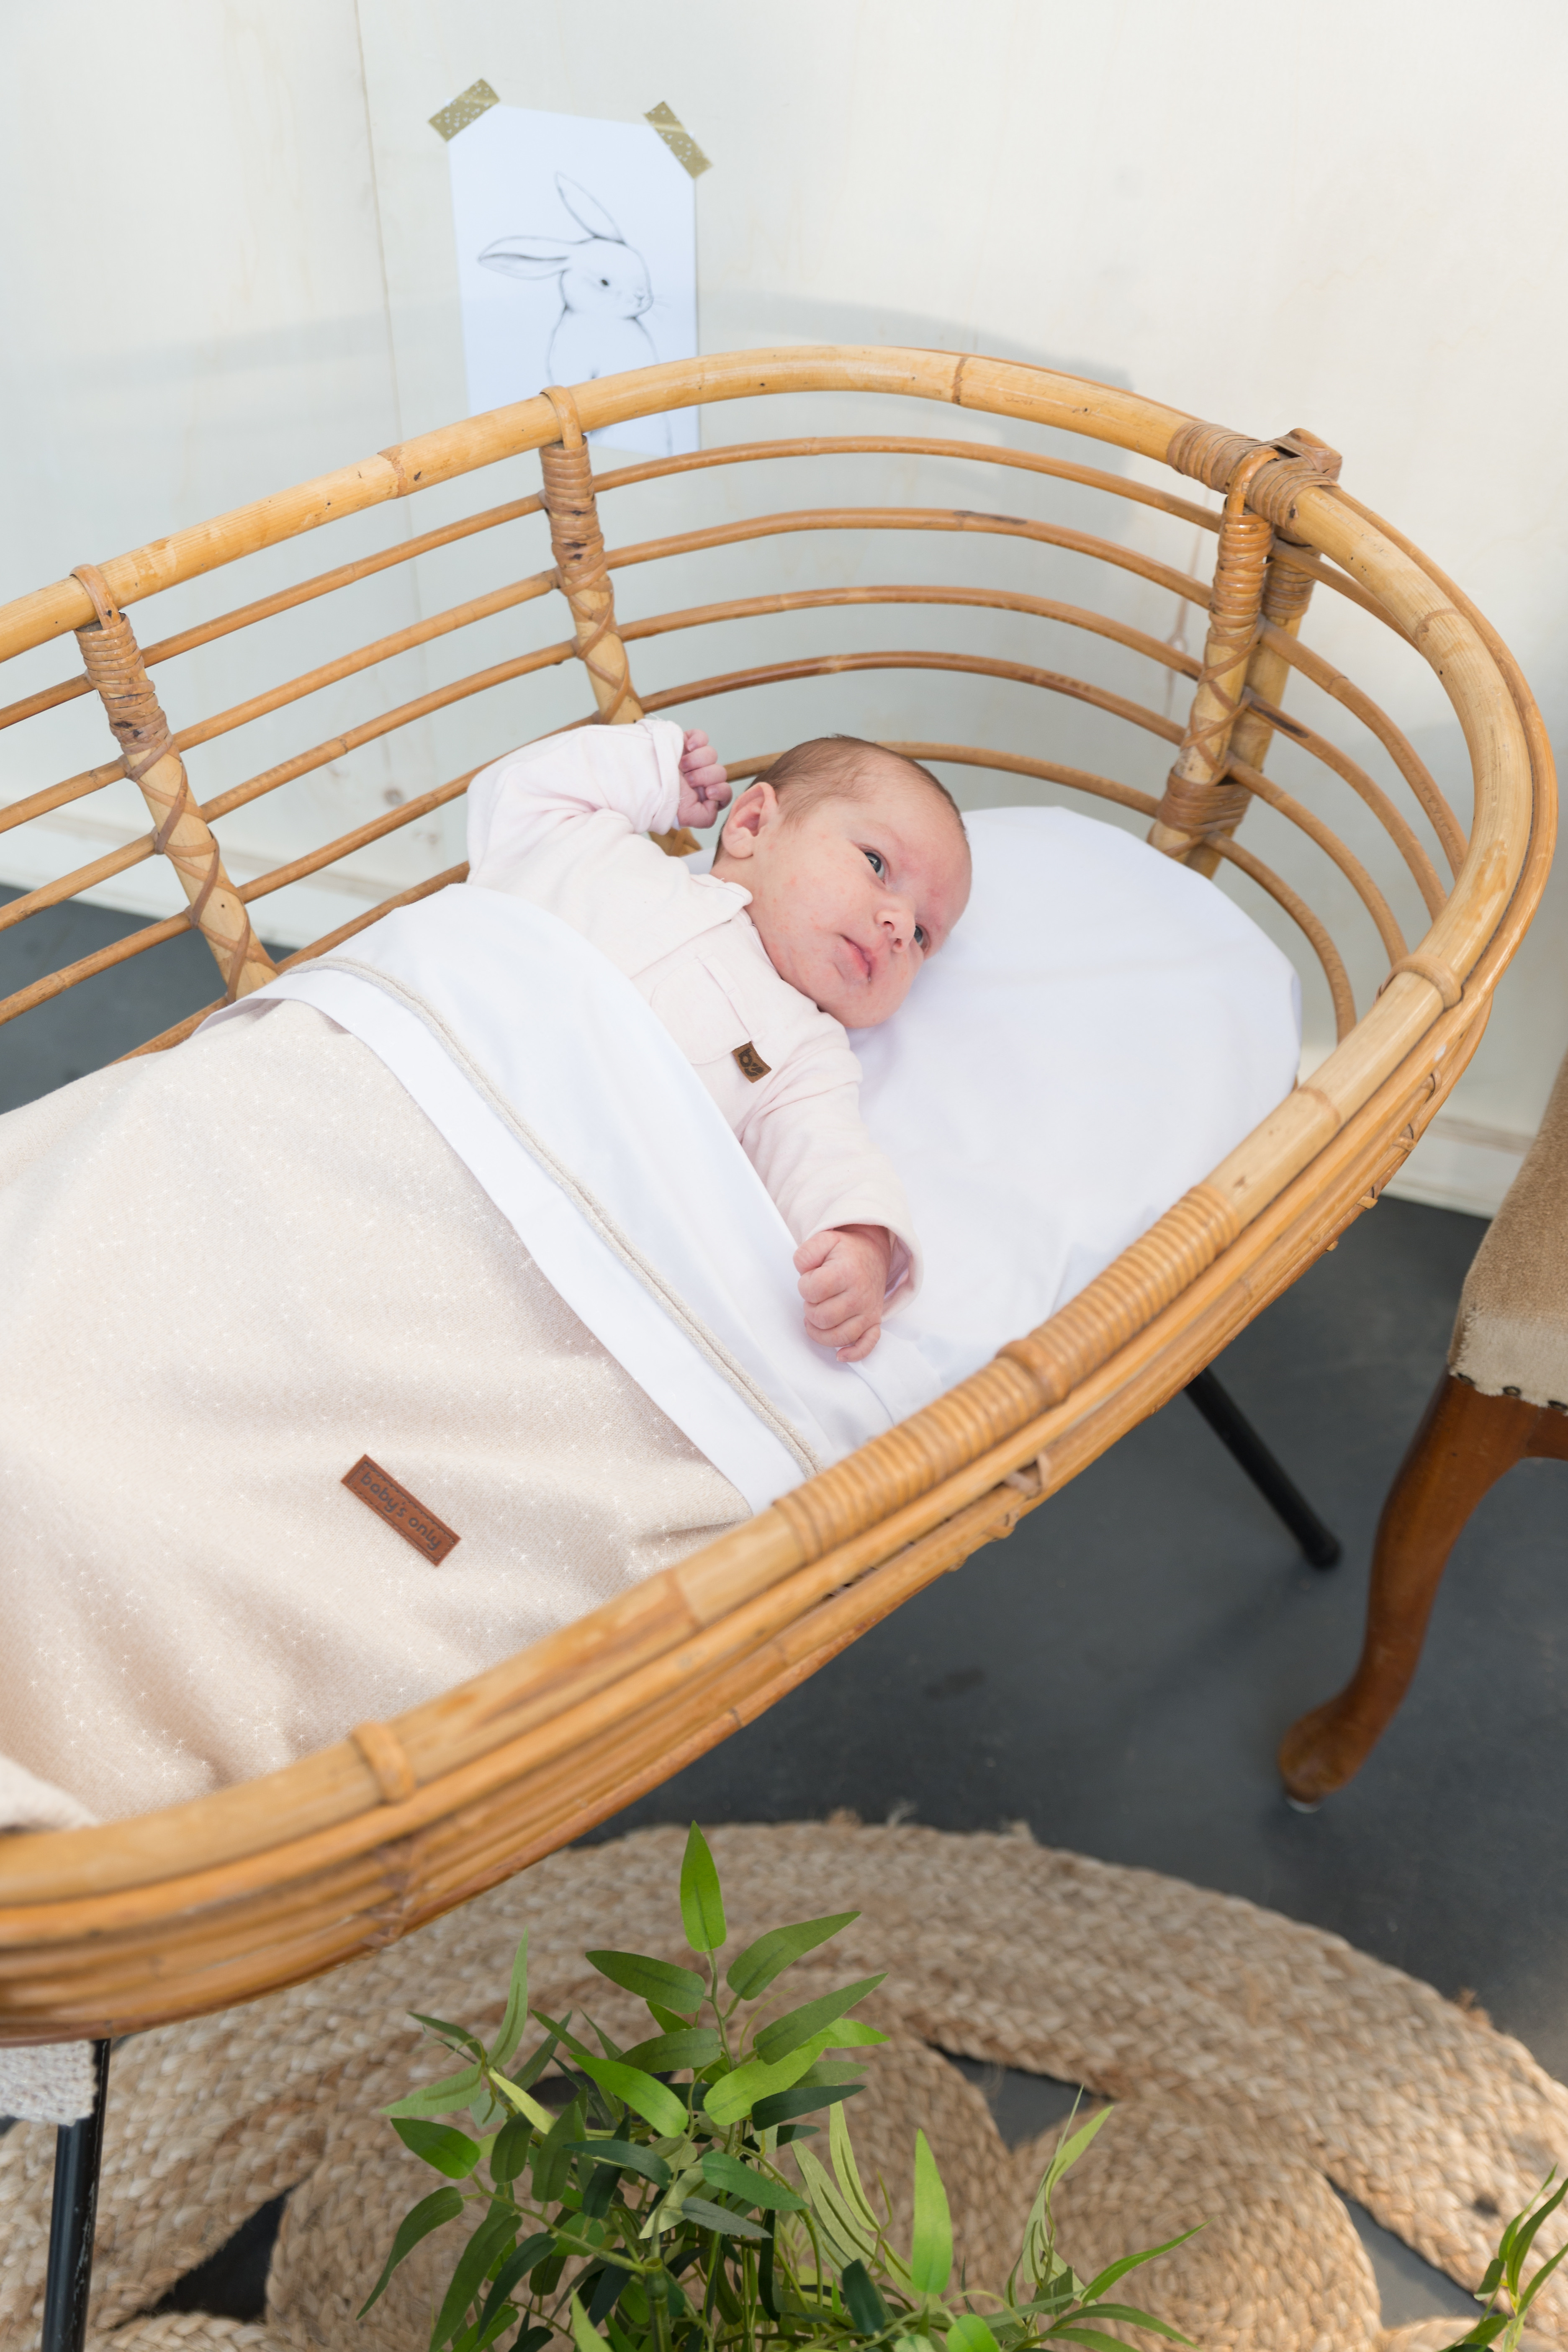 Baby crib sheet knitted ribbon gold-ivory melee/white